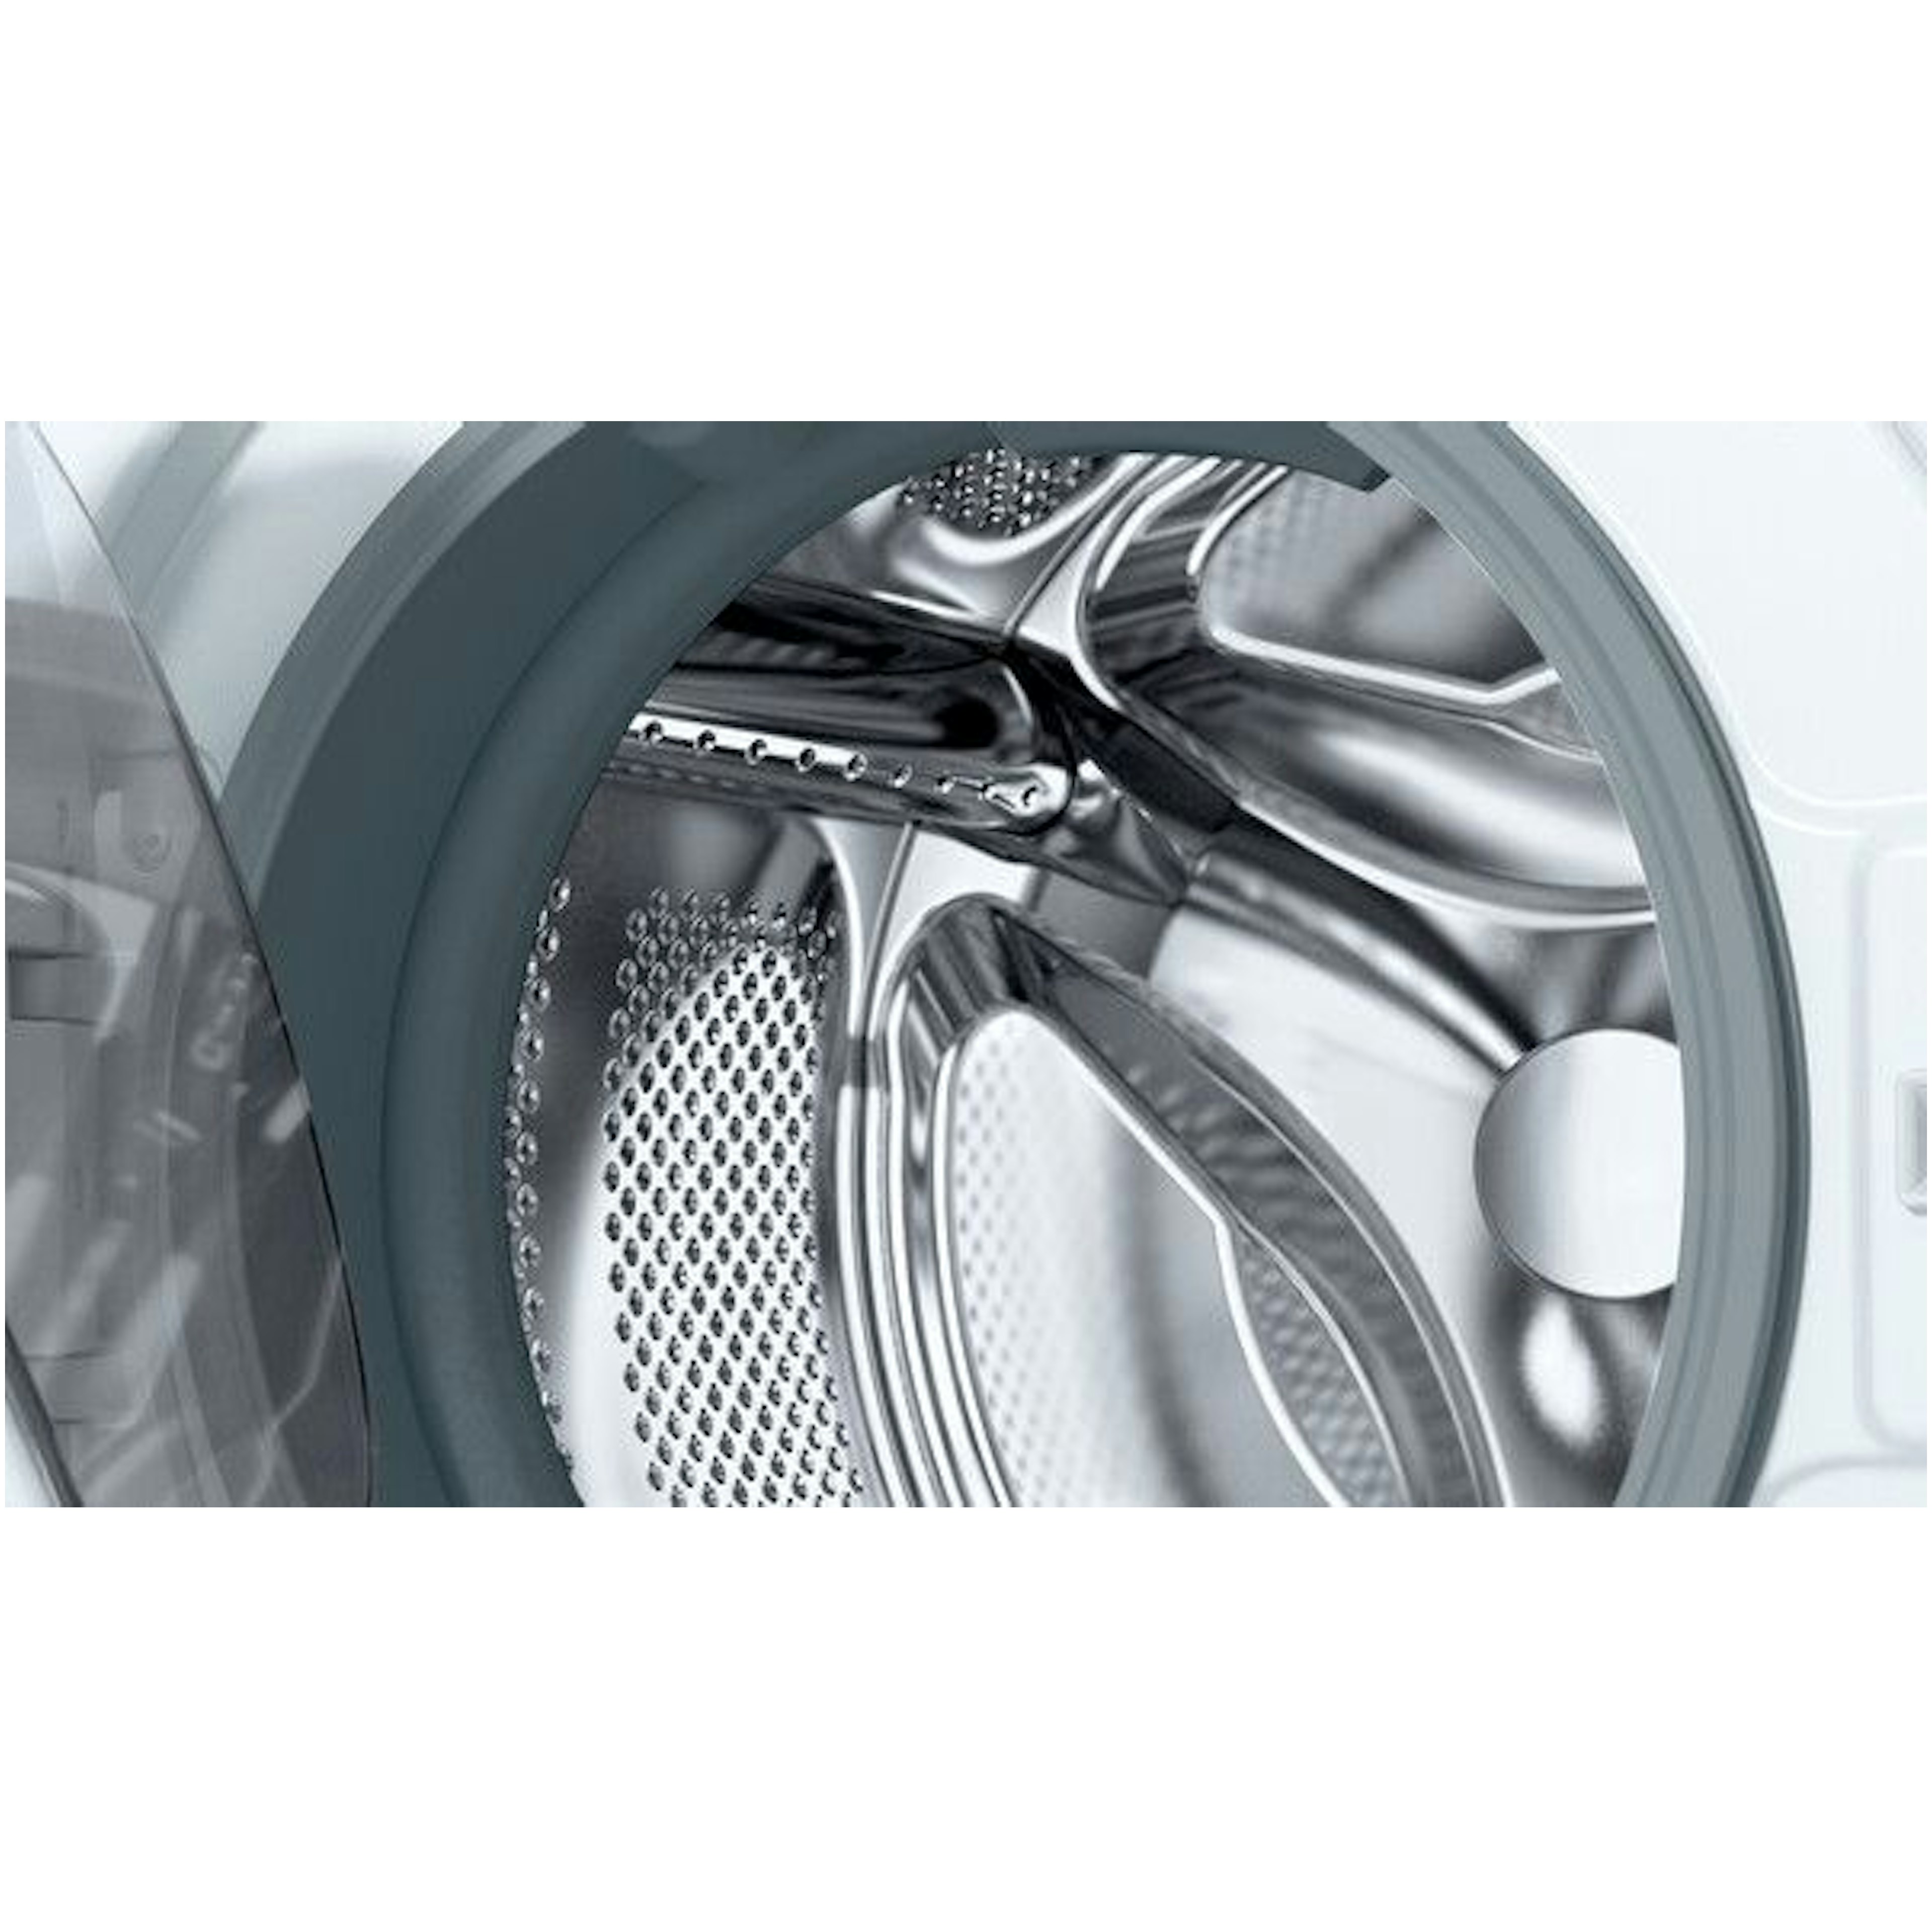 Bosch wasmachine  WAJ28001NL afbeelding 4